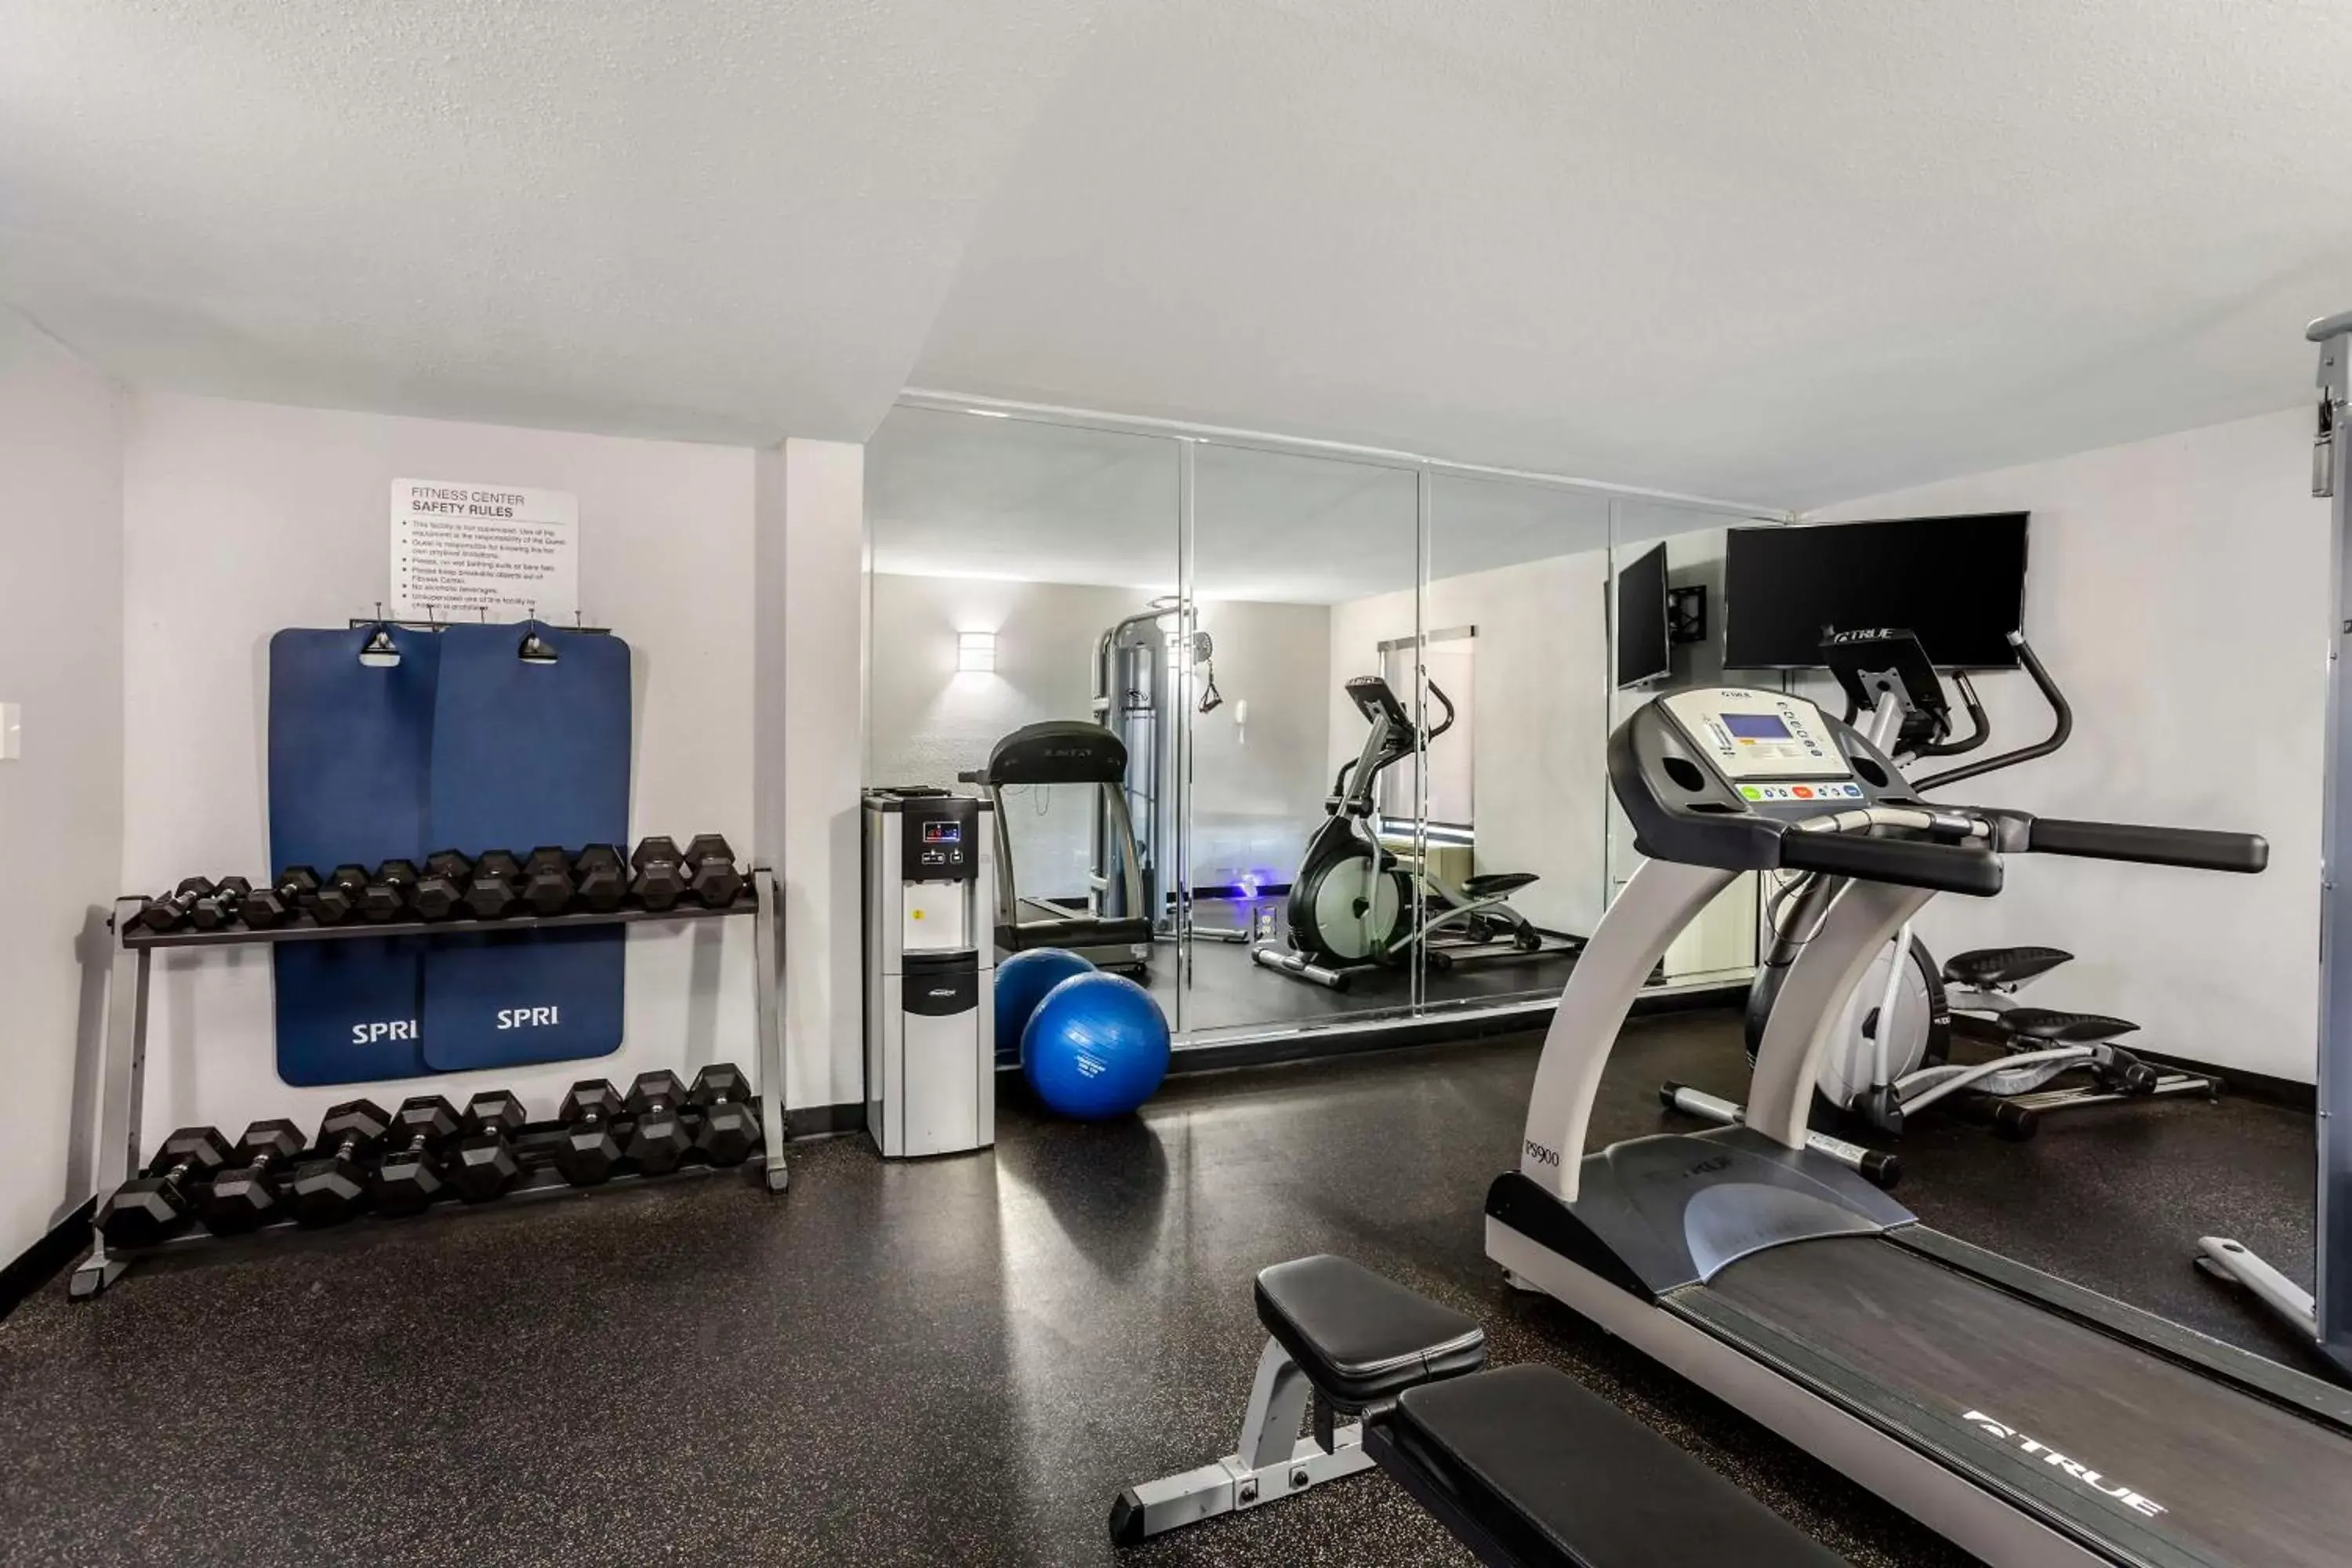 Fitness centre/facilities, Fitness Center/Facilities in Best Western Plus Jonesboro Inn & Suites